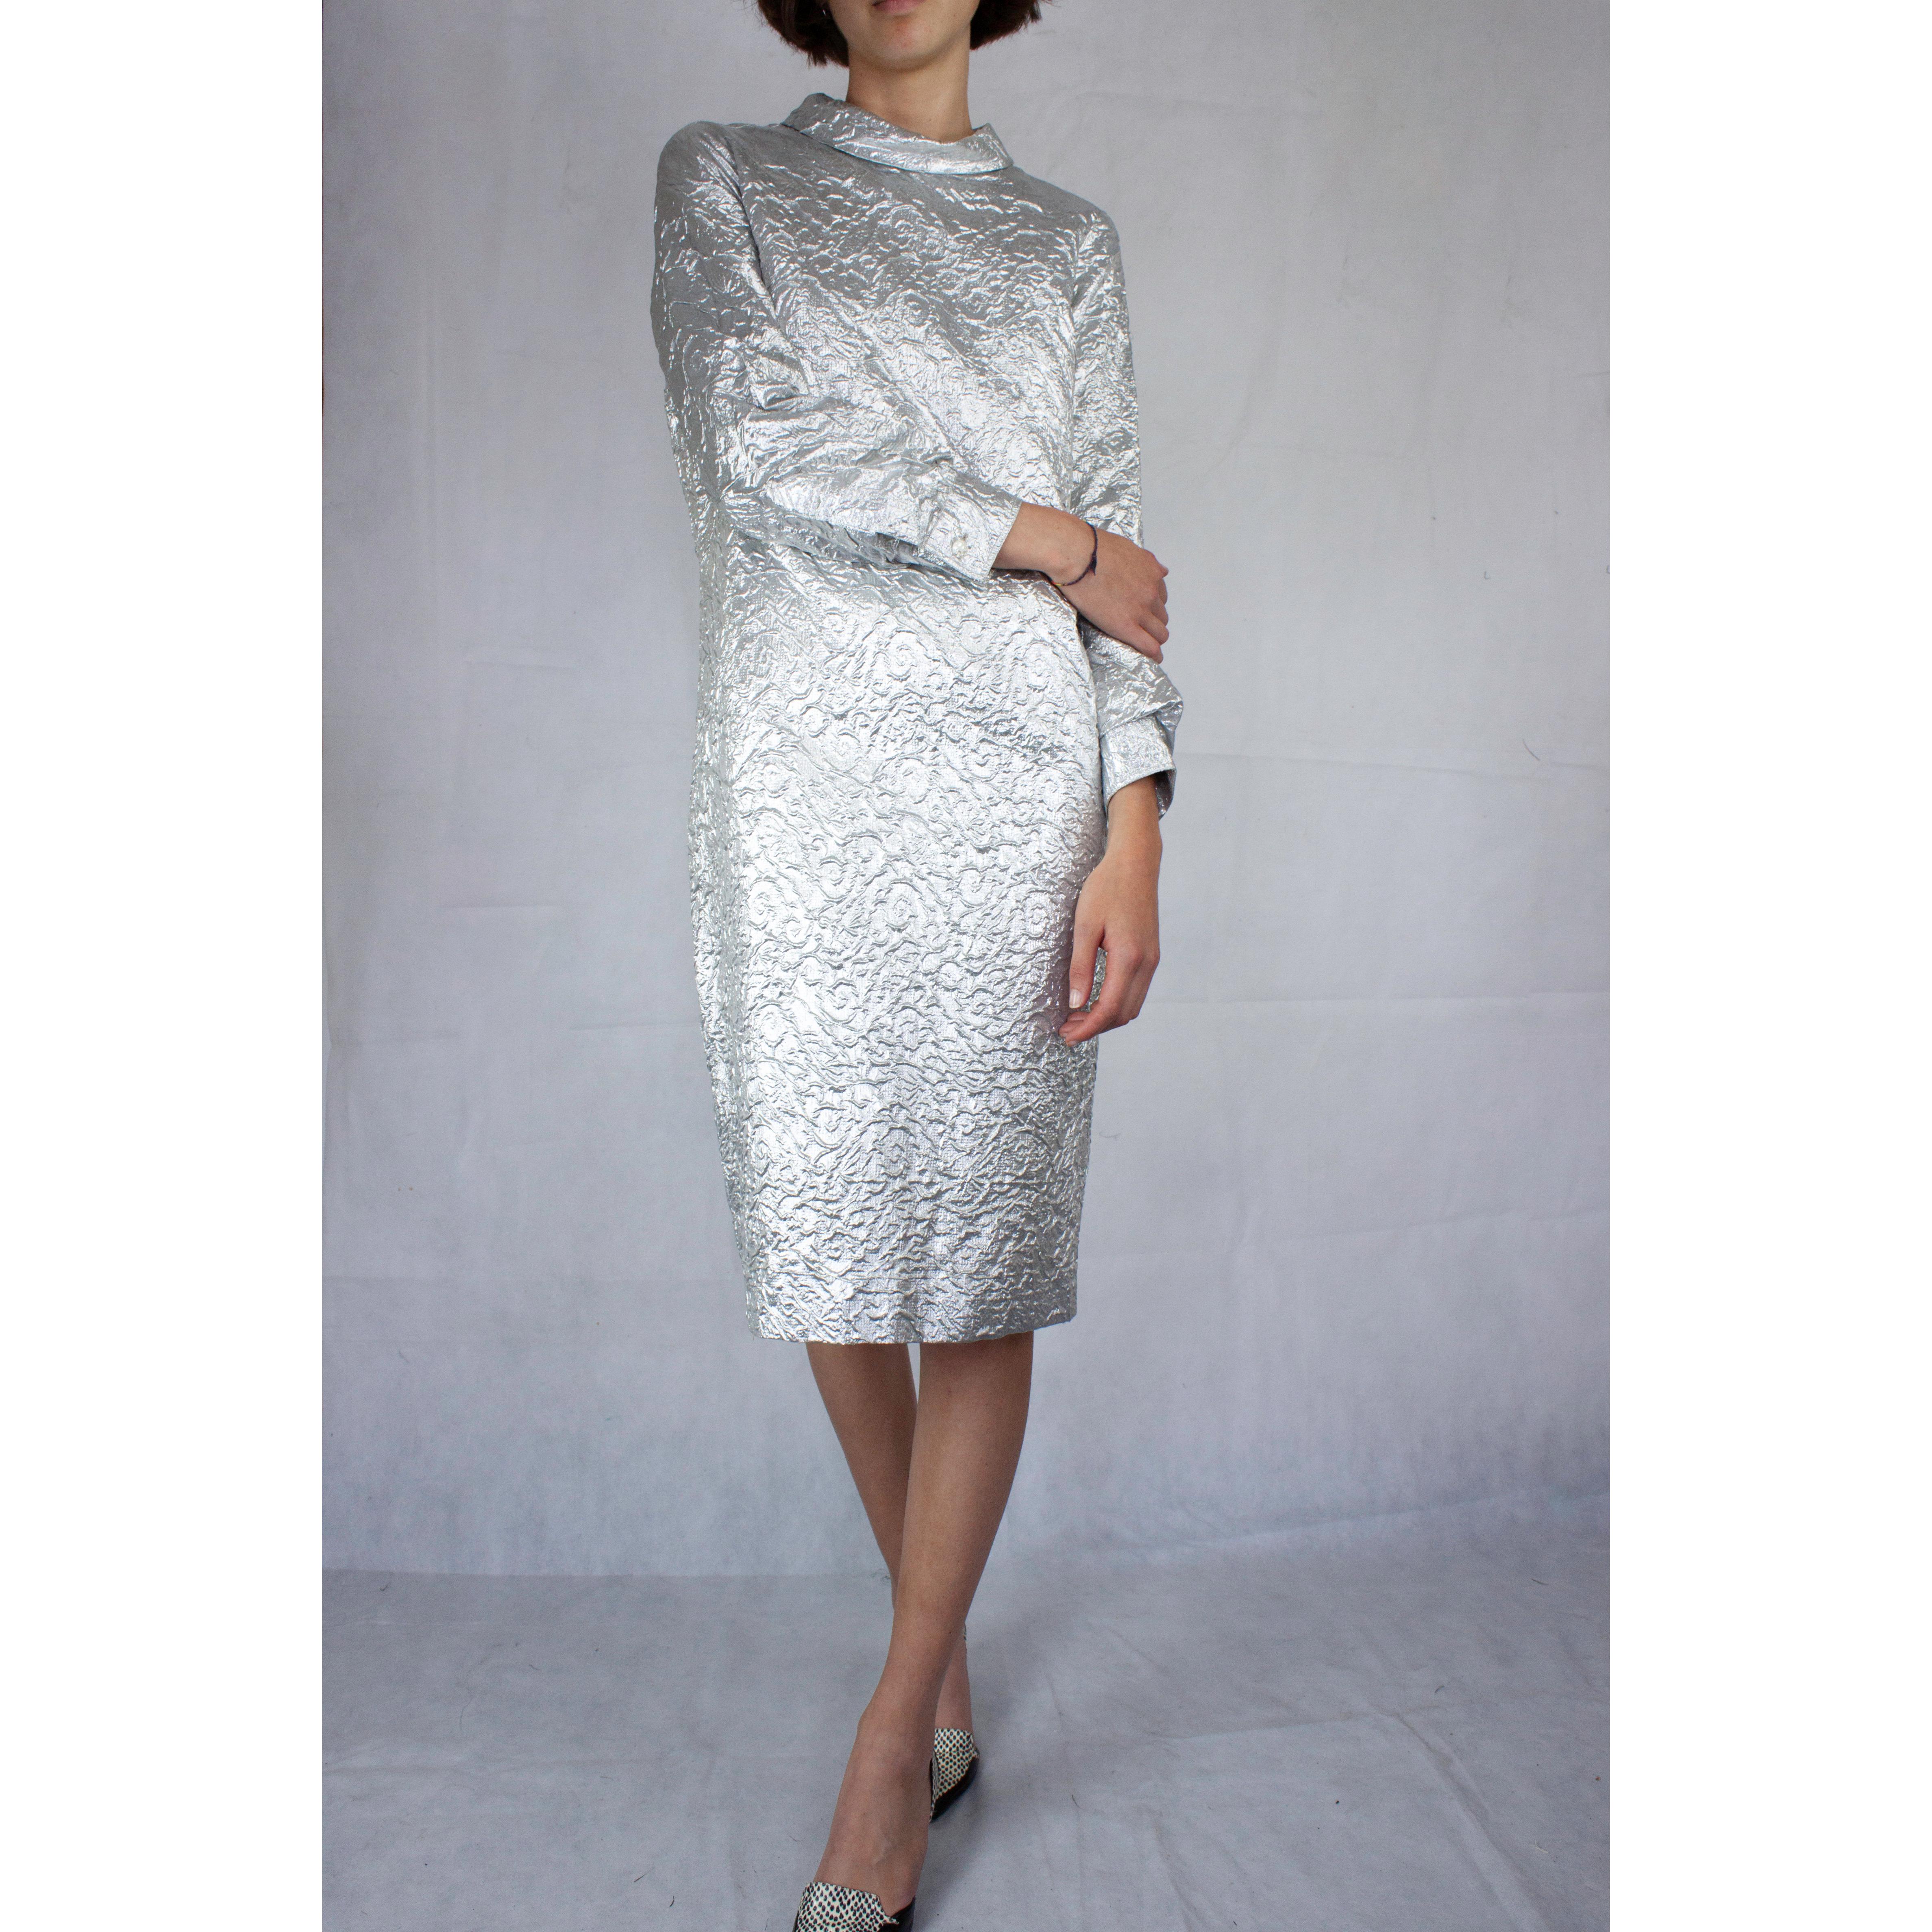 Women's Rare Christian Dior crushed metallic shift evening dress. circa 1960s